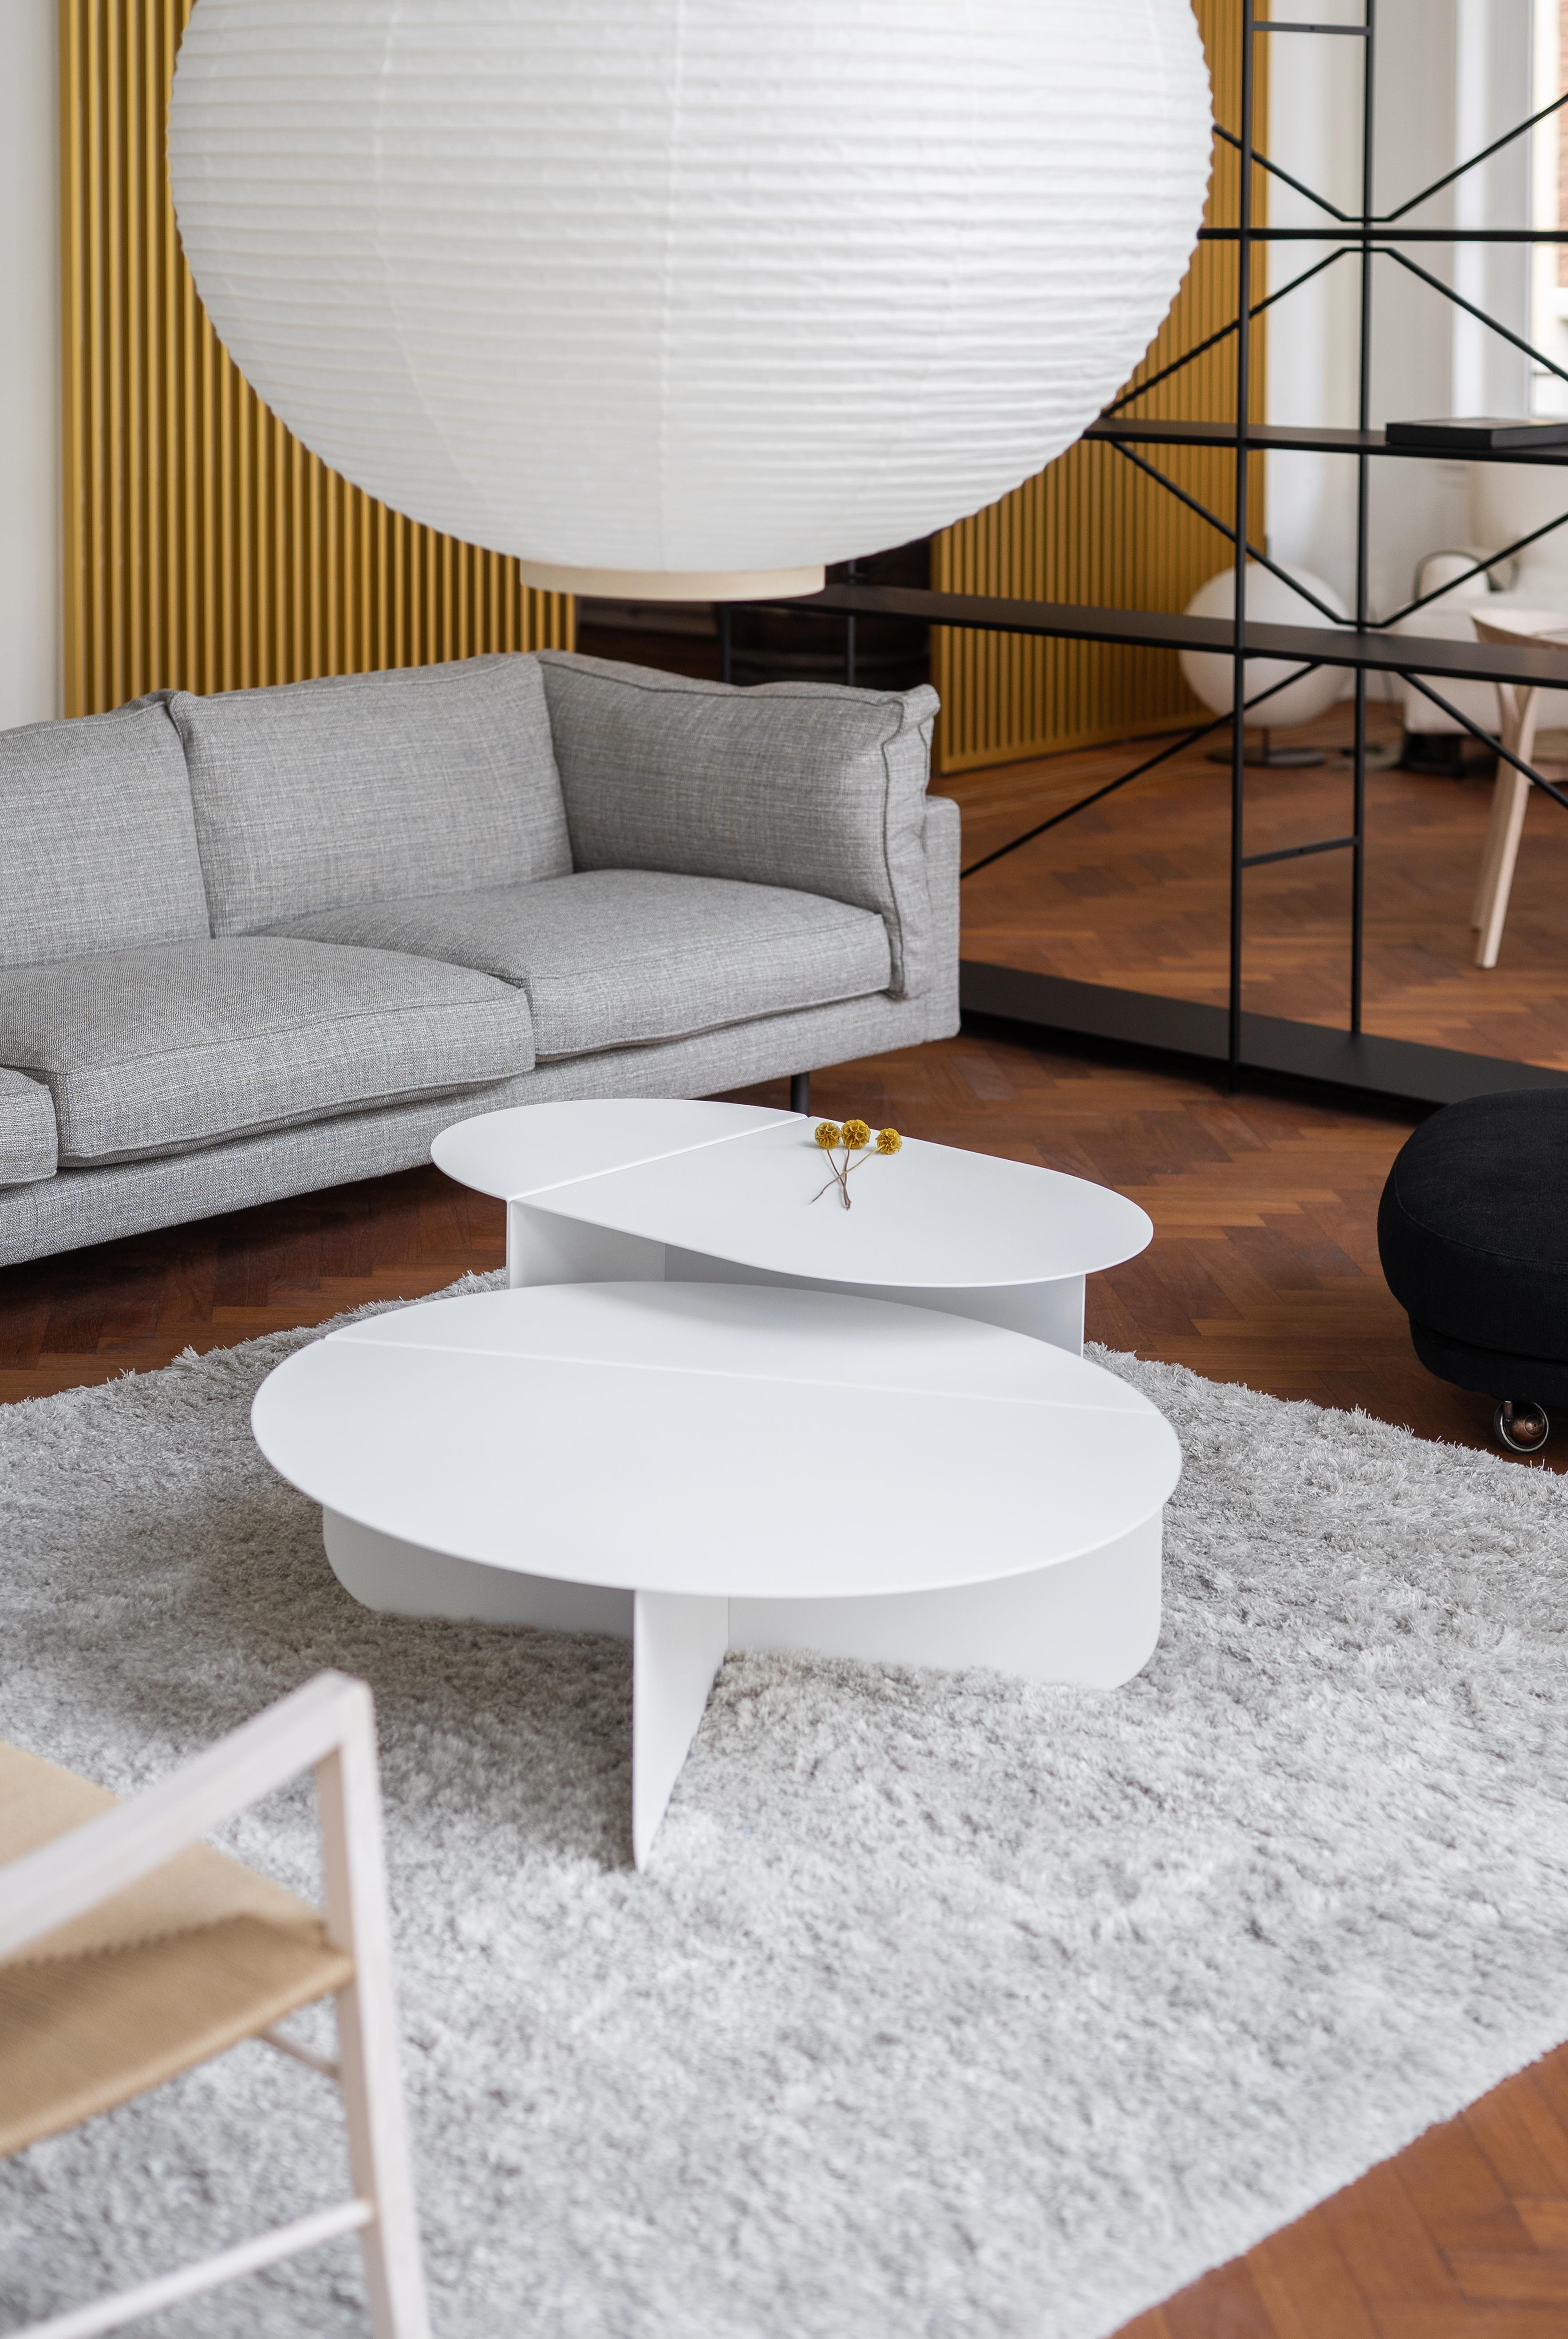 Dutch Colour, a Modern Oval Coffee Table, Ral 1001 - Beige, by Bas Vellekoop For Sale